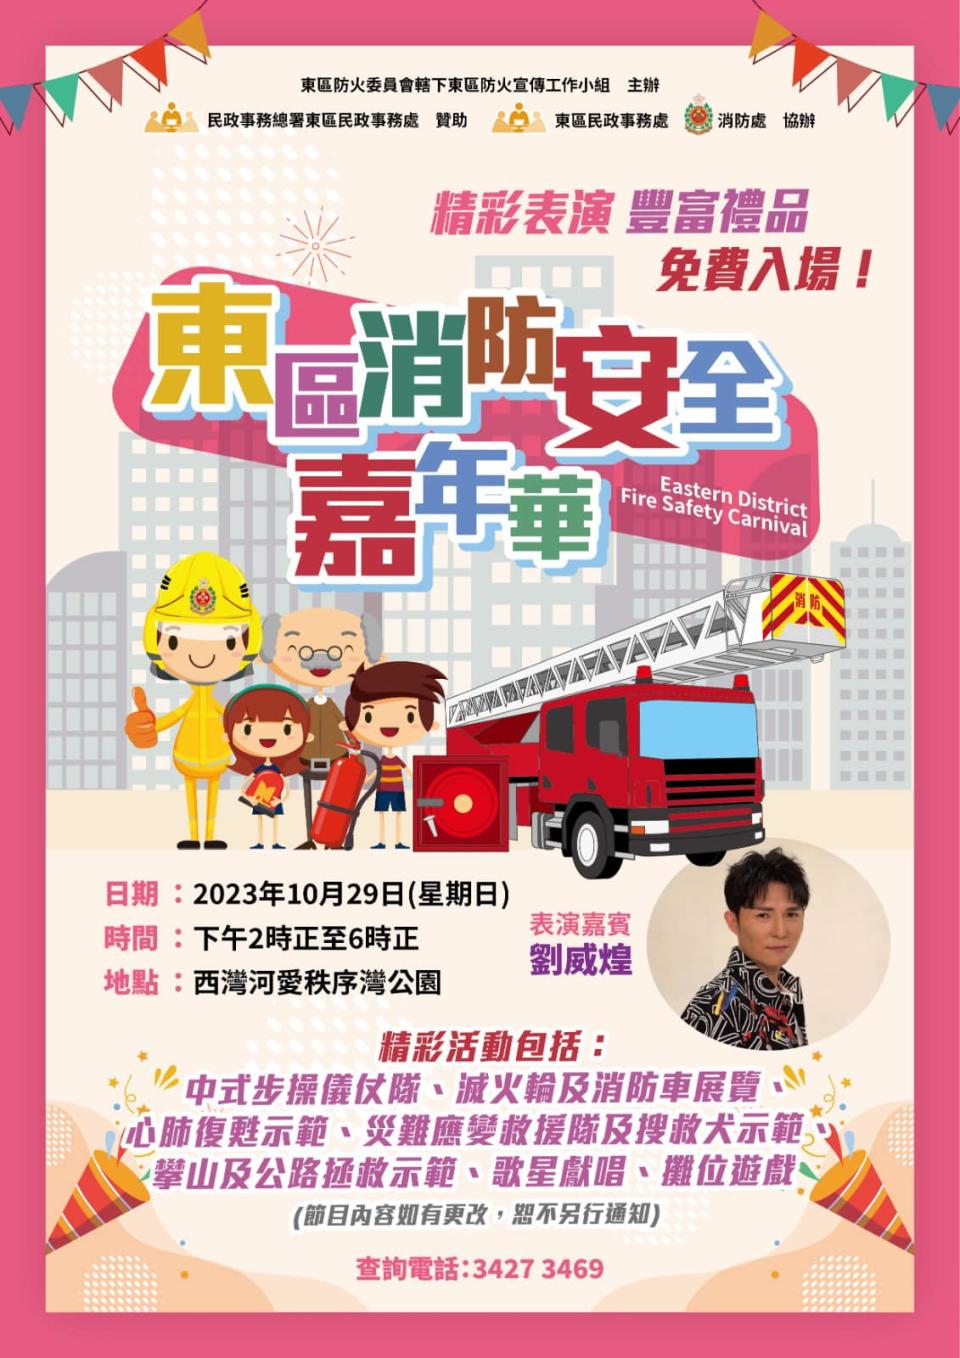 <span>東區消防安全嘉年華（圖片來源：香港消防處Facebook）</span>